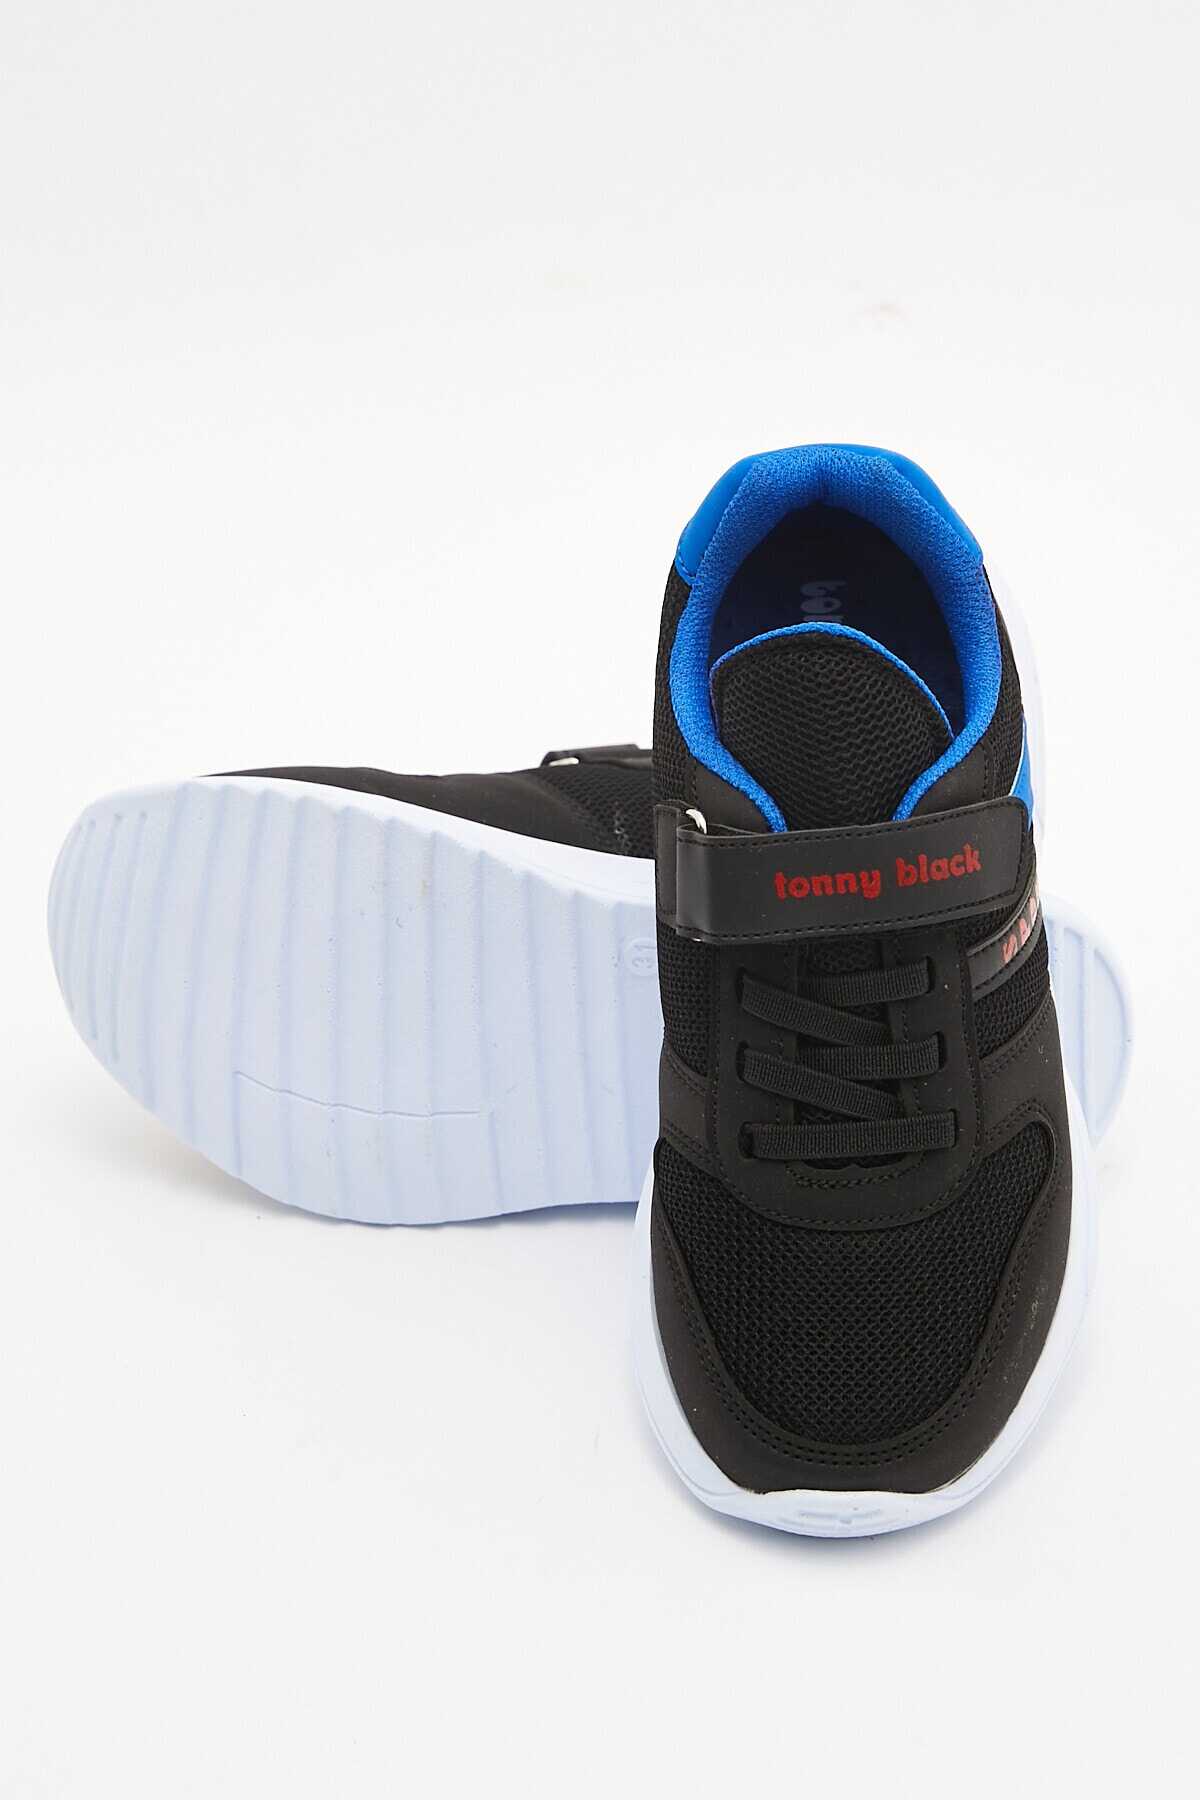 کفش ورزشی کودک اسپرت مدل آدرینا مشکی آبی برند Tonny Black